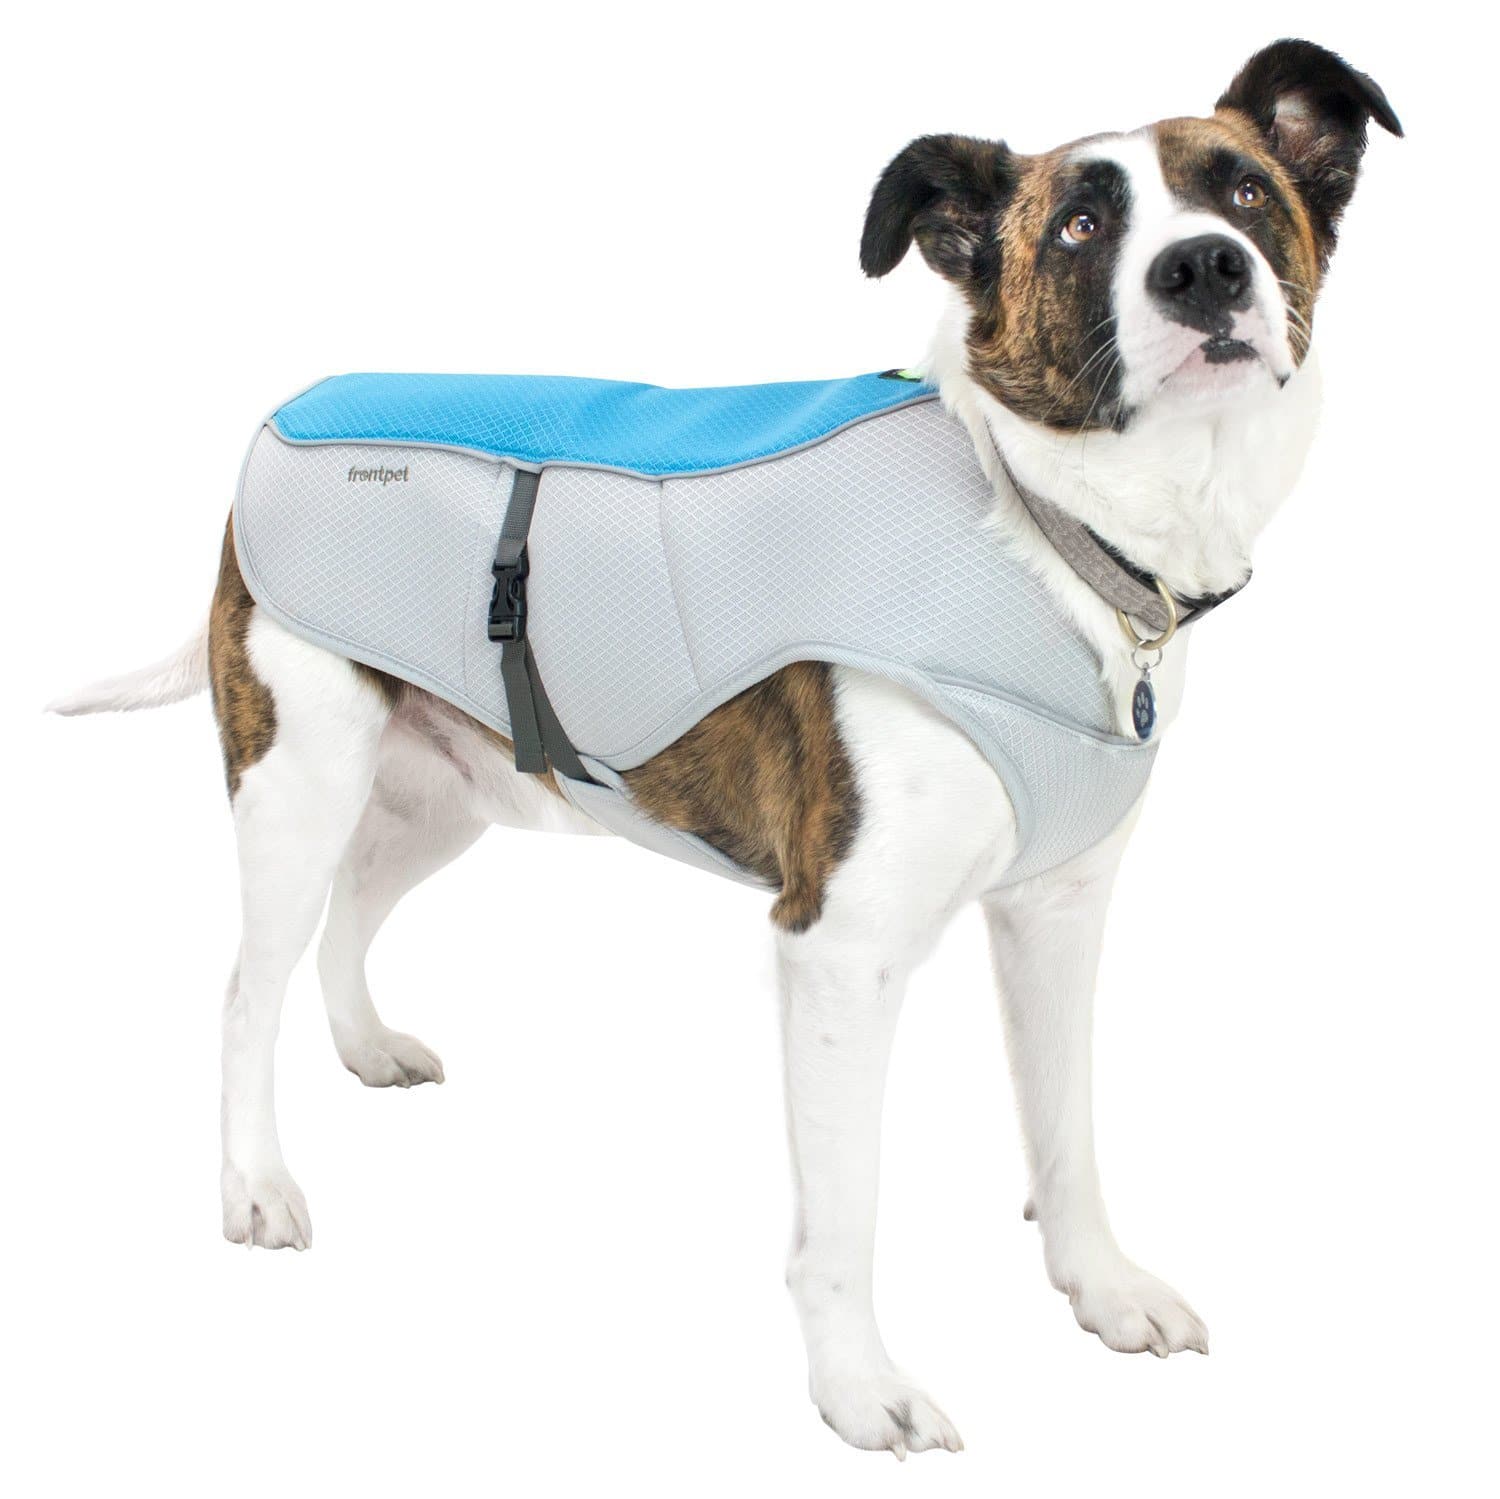 The Best Dog Cooling Vests in 2020 